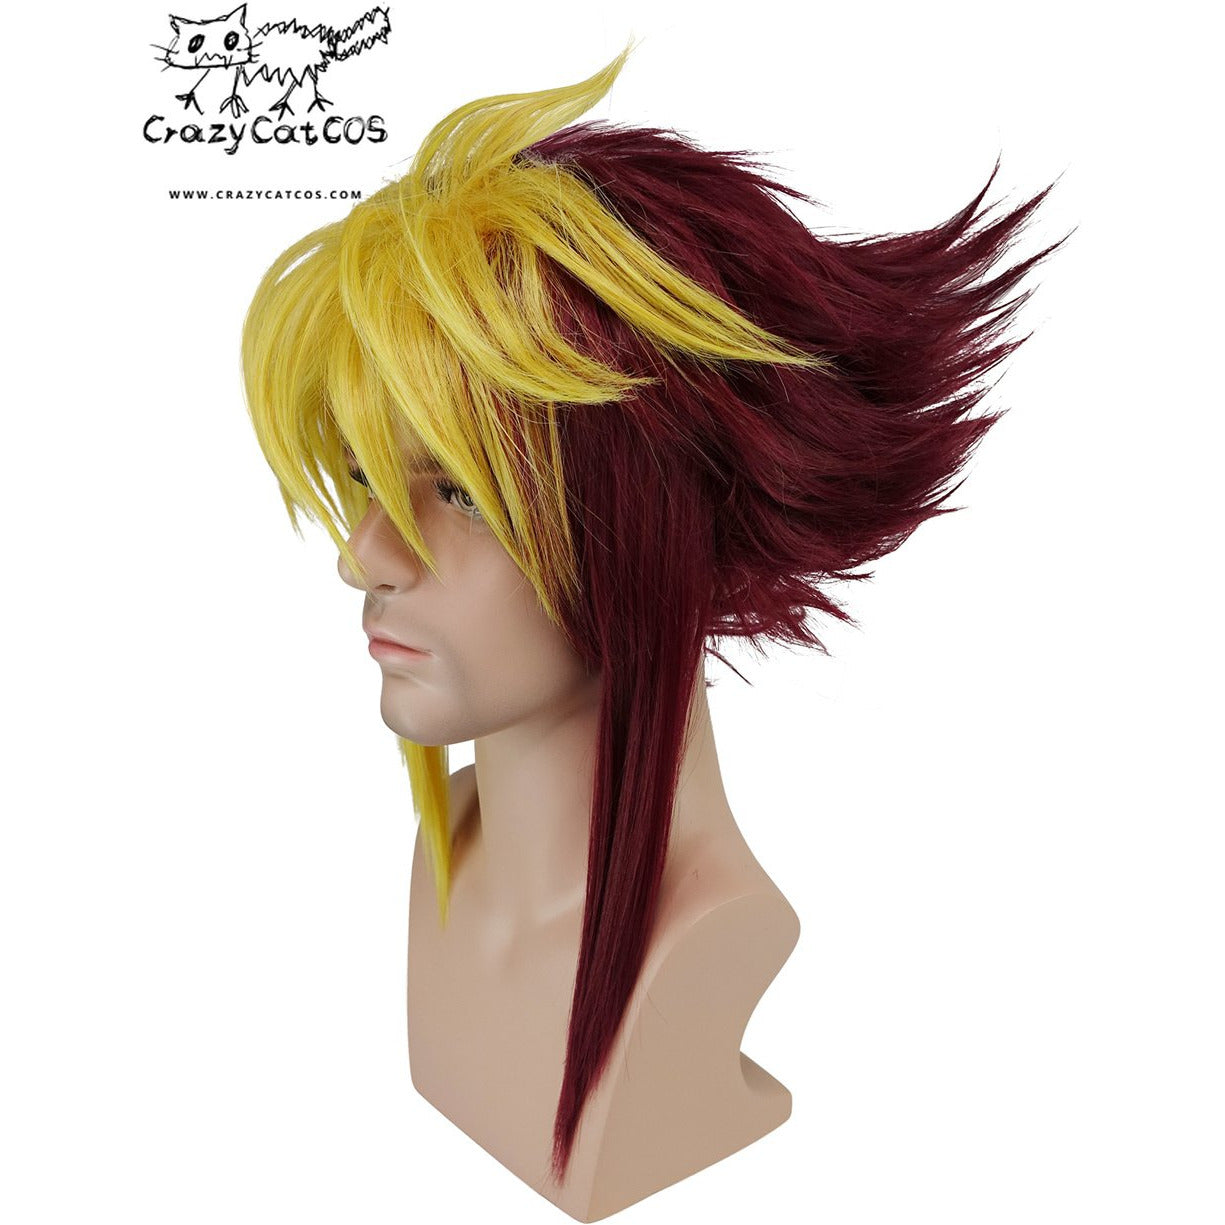 Quattro IV Cosplay Wig Gold and Auburn Hair Yu-Gi-Oh Halloween Costume Wig